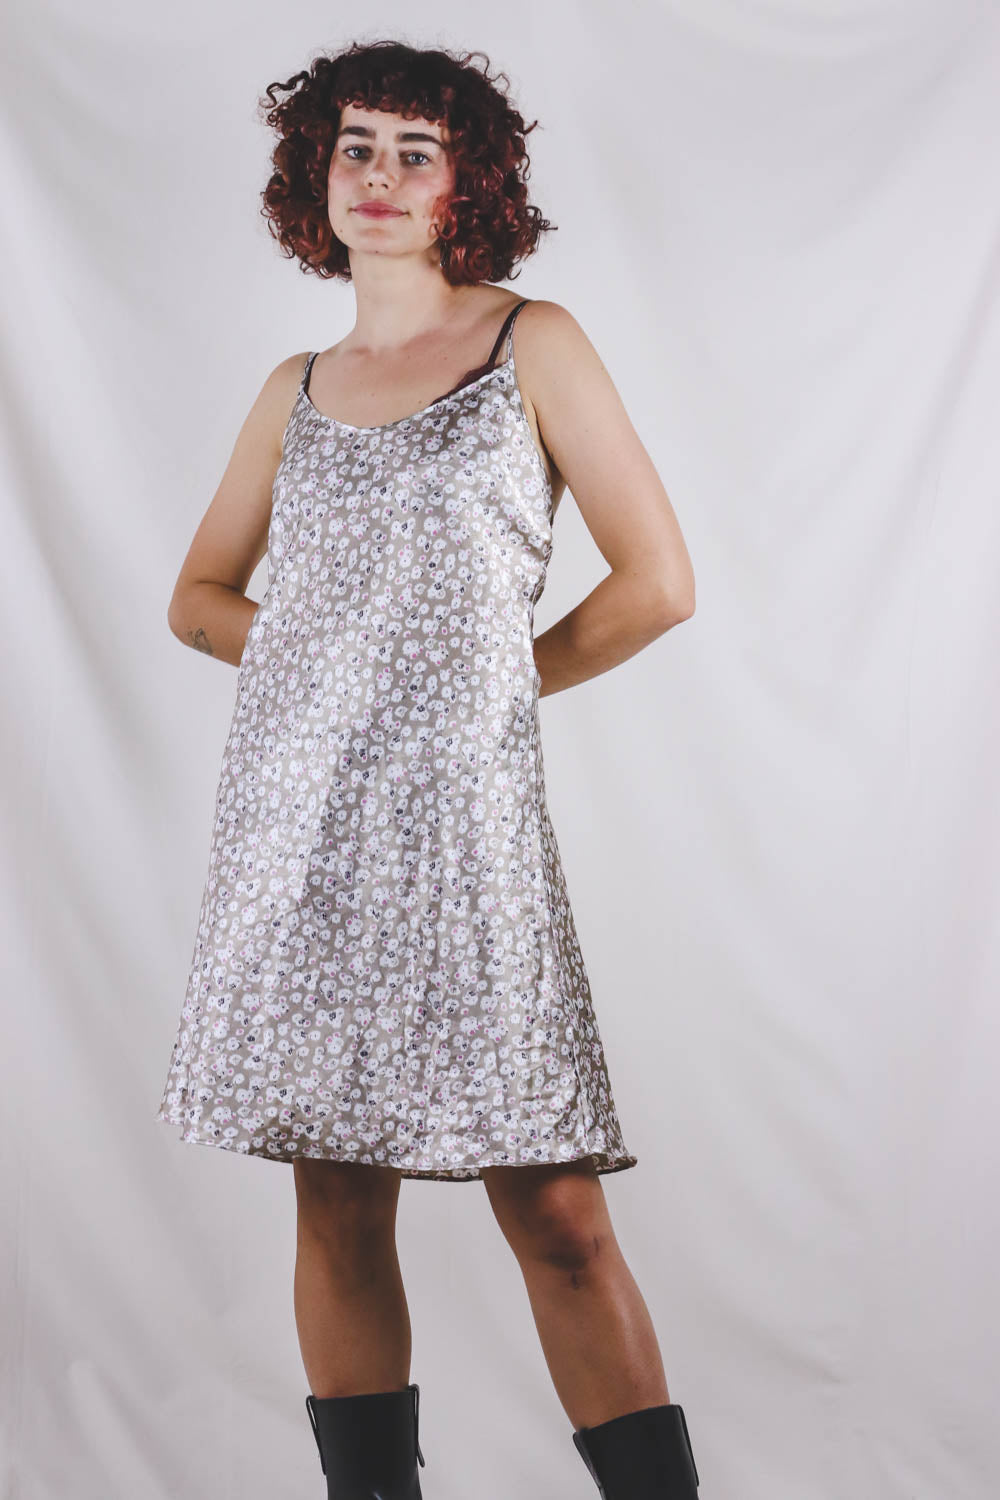 Diana vintage slip dress